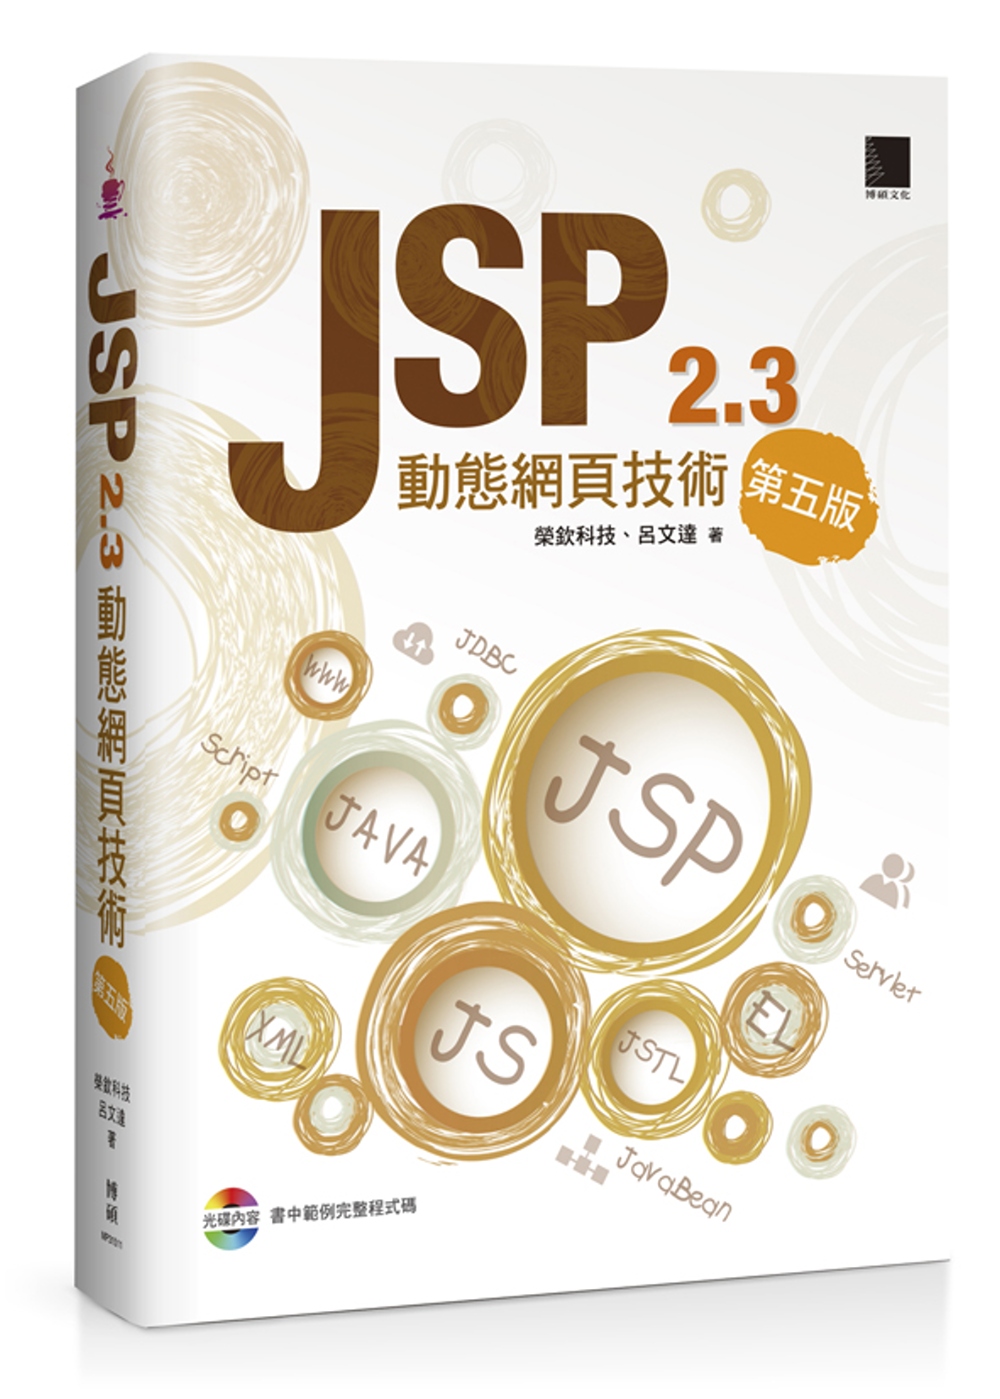 JSP 2.3動...